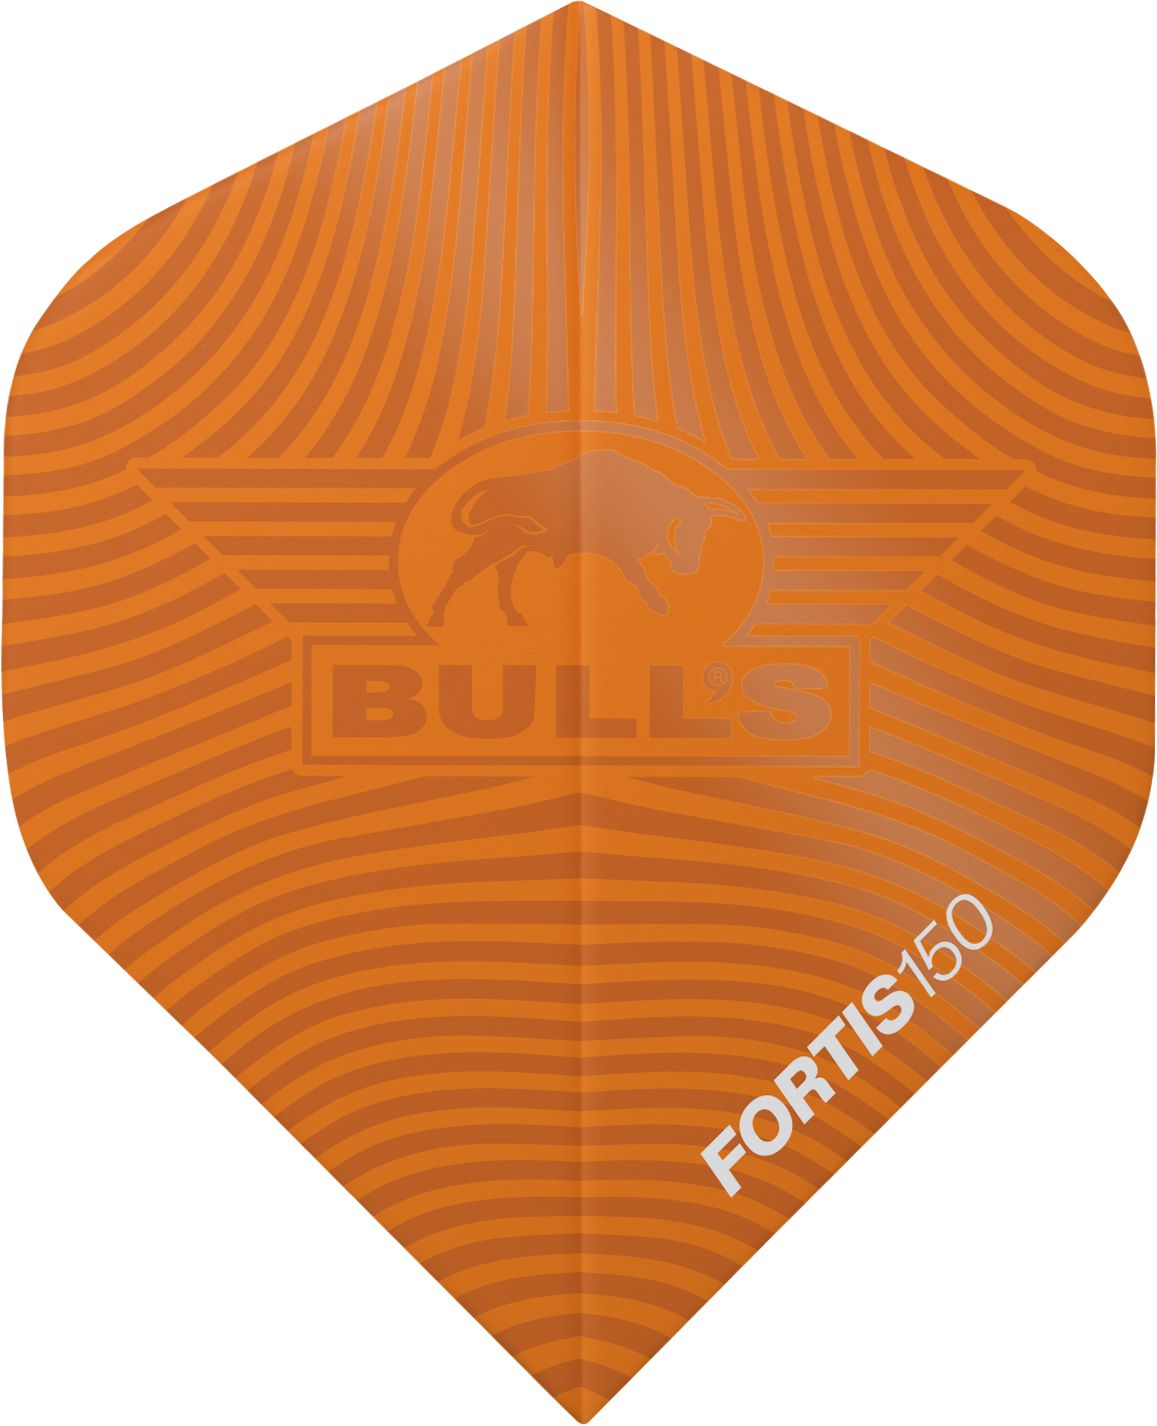 Bulls NL Fortis 150 Orange Flights